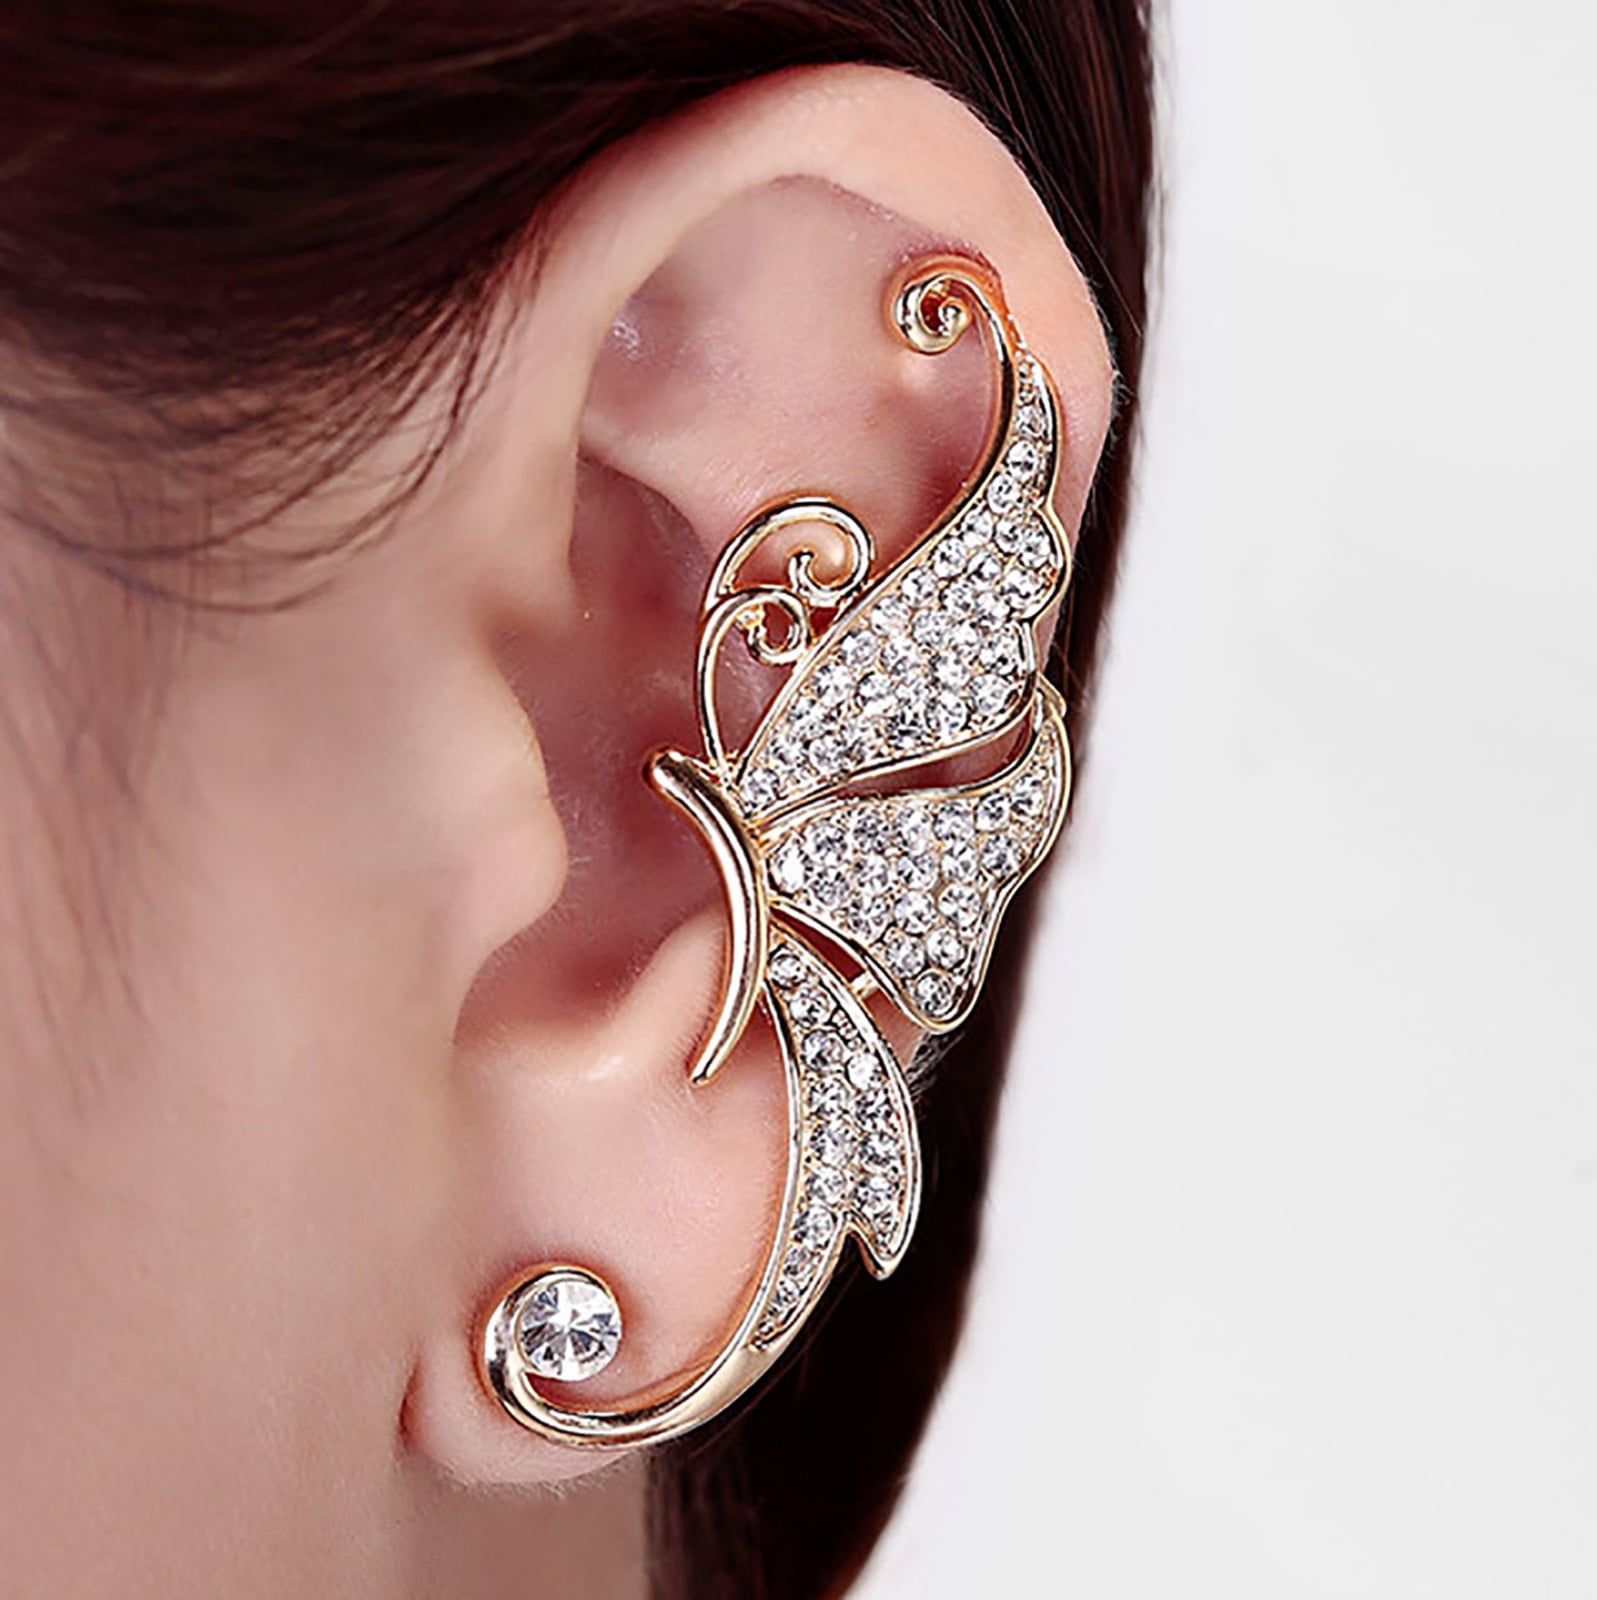 Clearance under 5 Shldybc Earrings for Women Diamond Butterfly Earrings Earrings Earrings Ear Clips Earrings Earrings Women on Clearance 8201cfeb ffc5 4f55 af8f 7fe0fc6ebdbf.832215a560d1e613f9371470b44f2e17